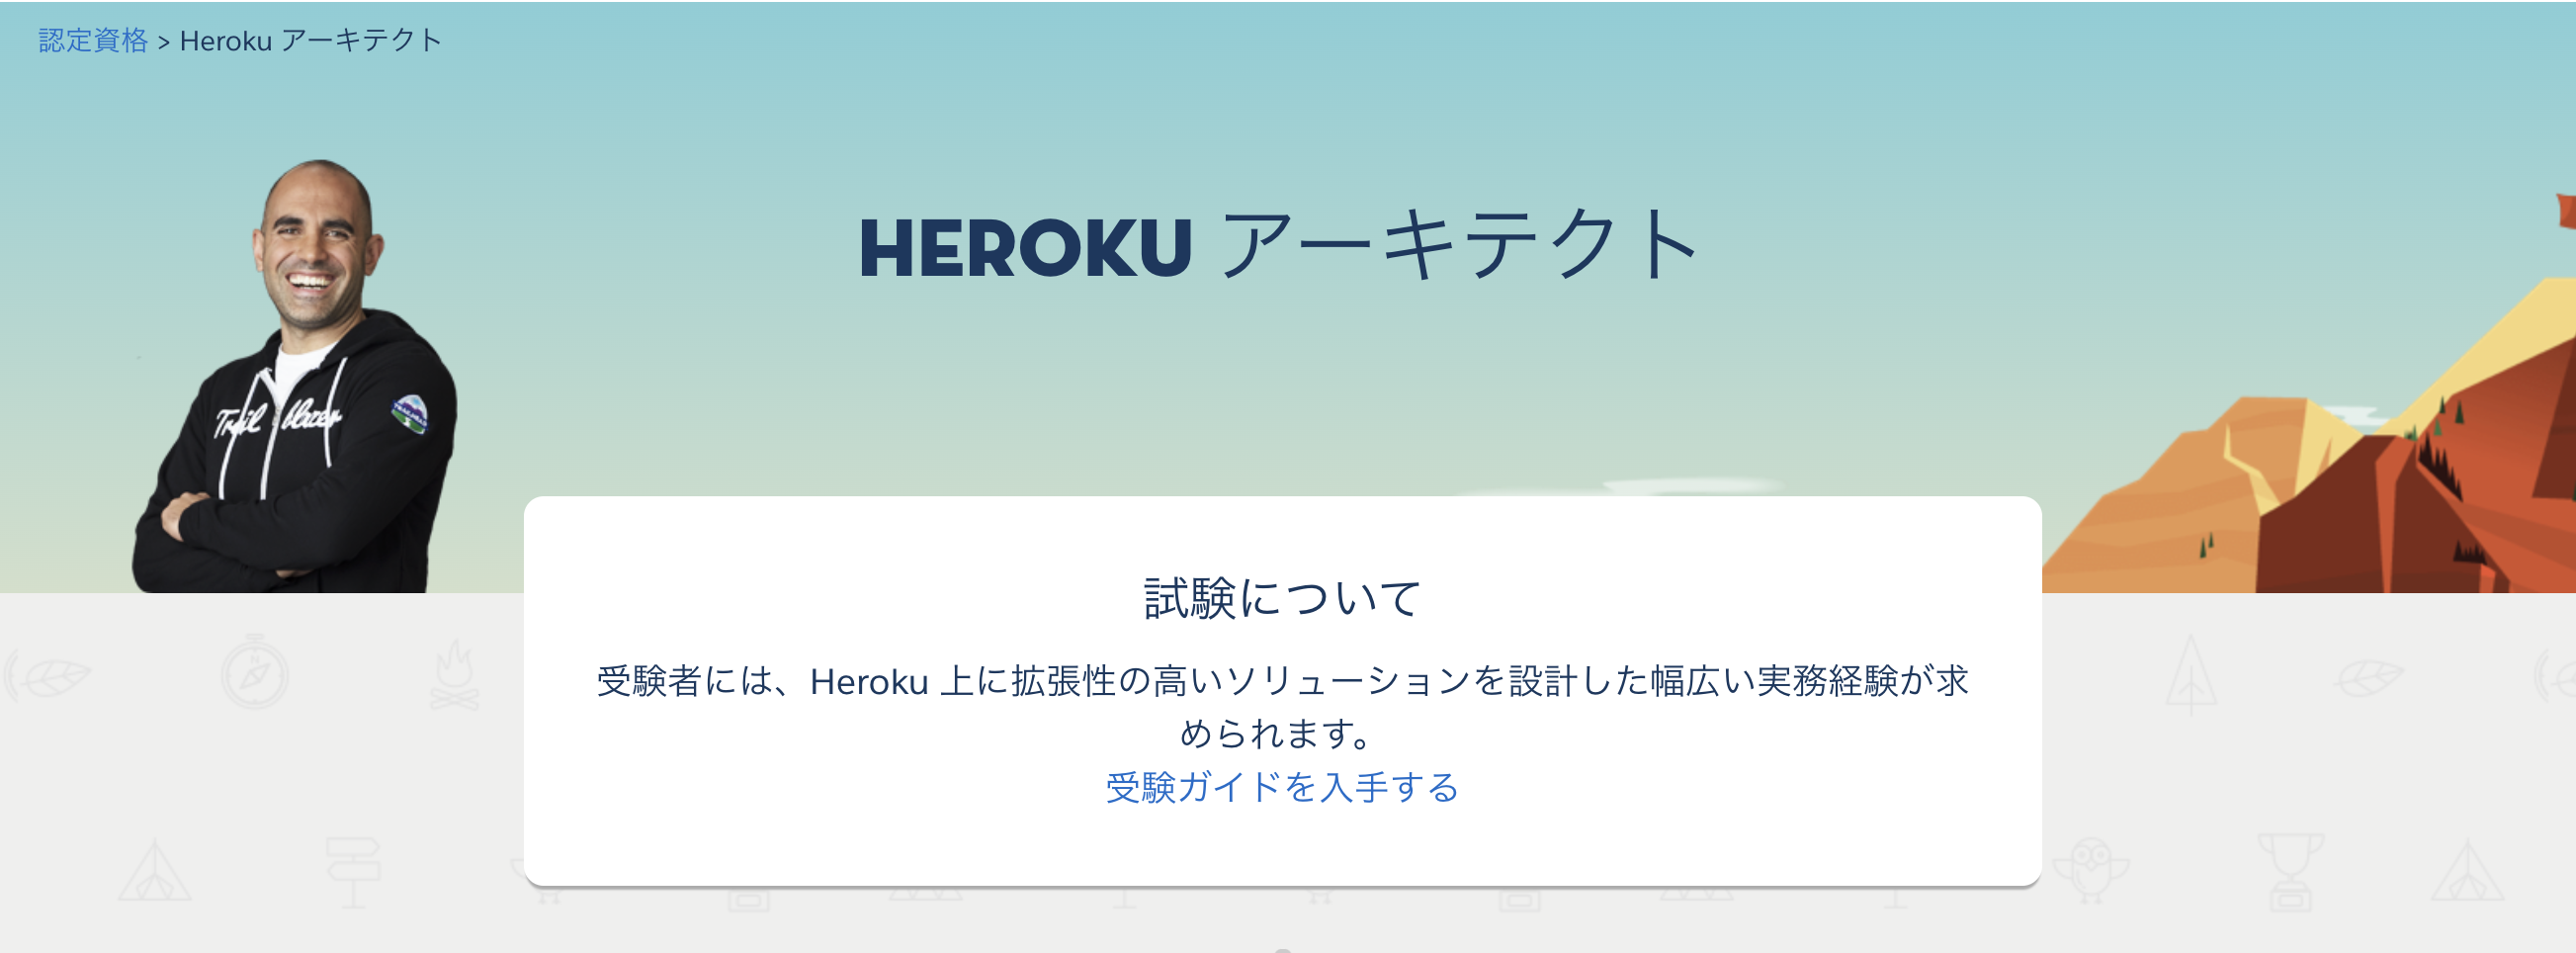 Salesforce 認定 Heroku アーキテクト